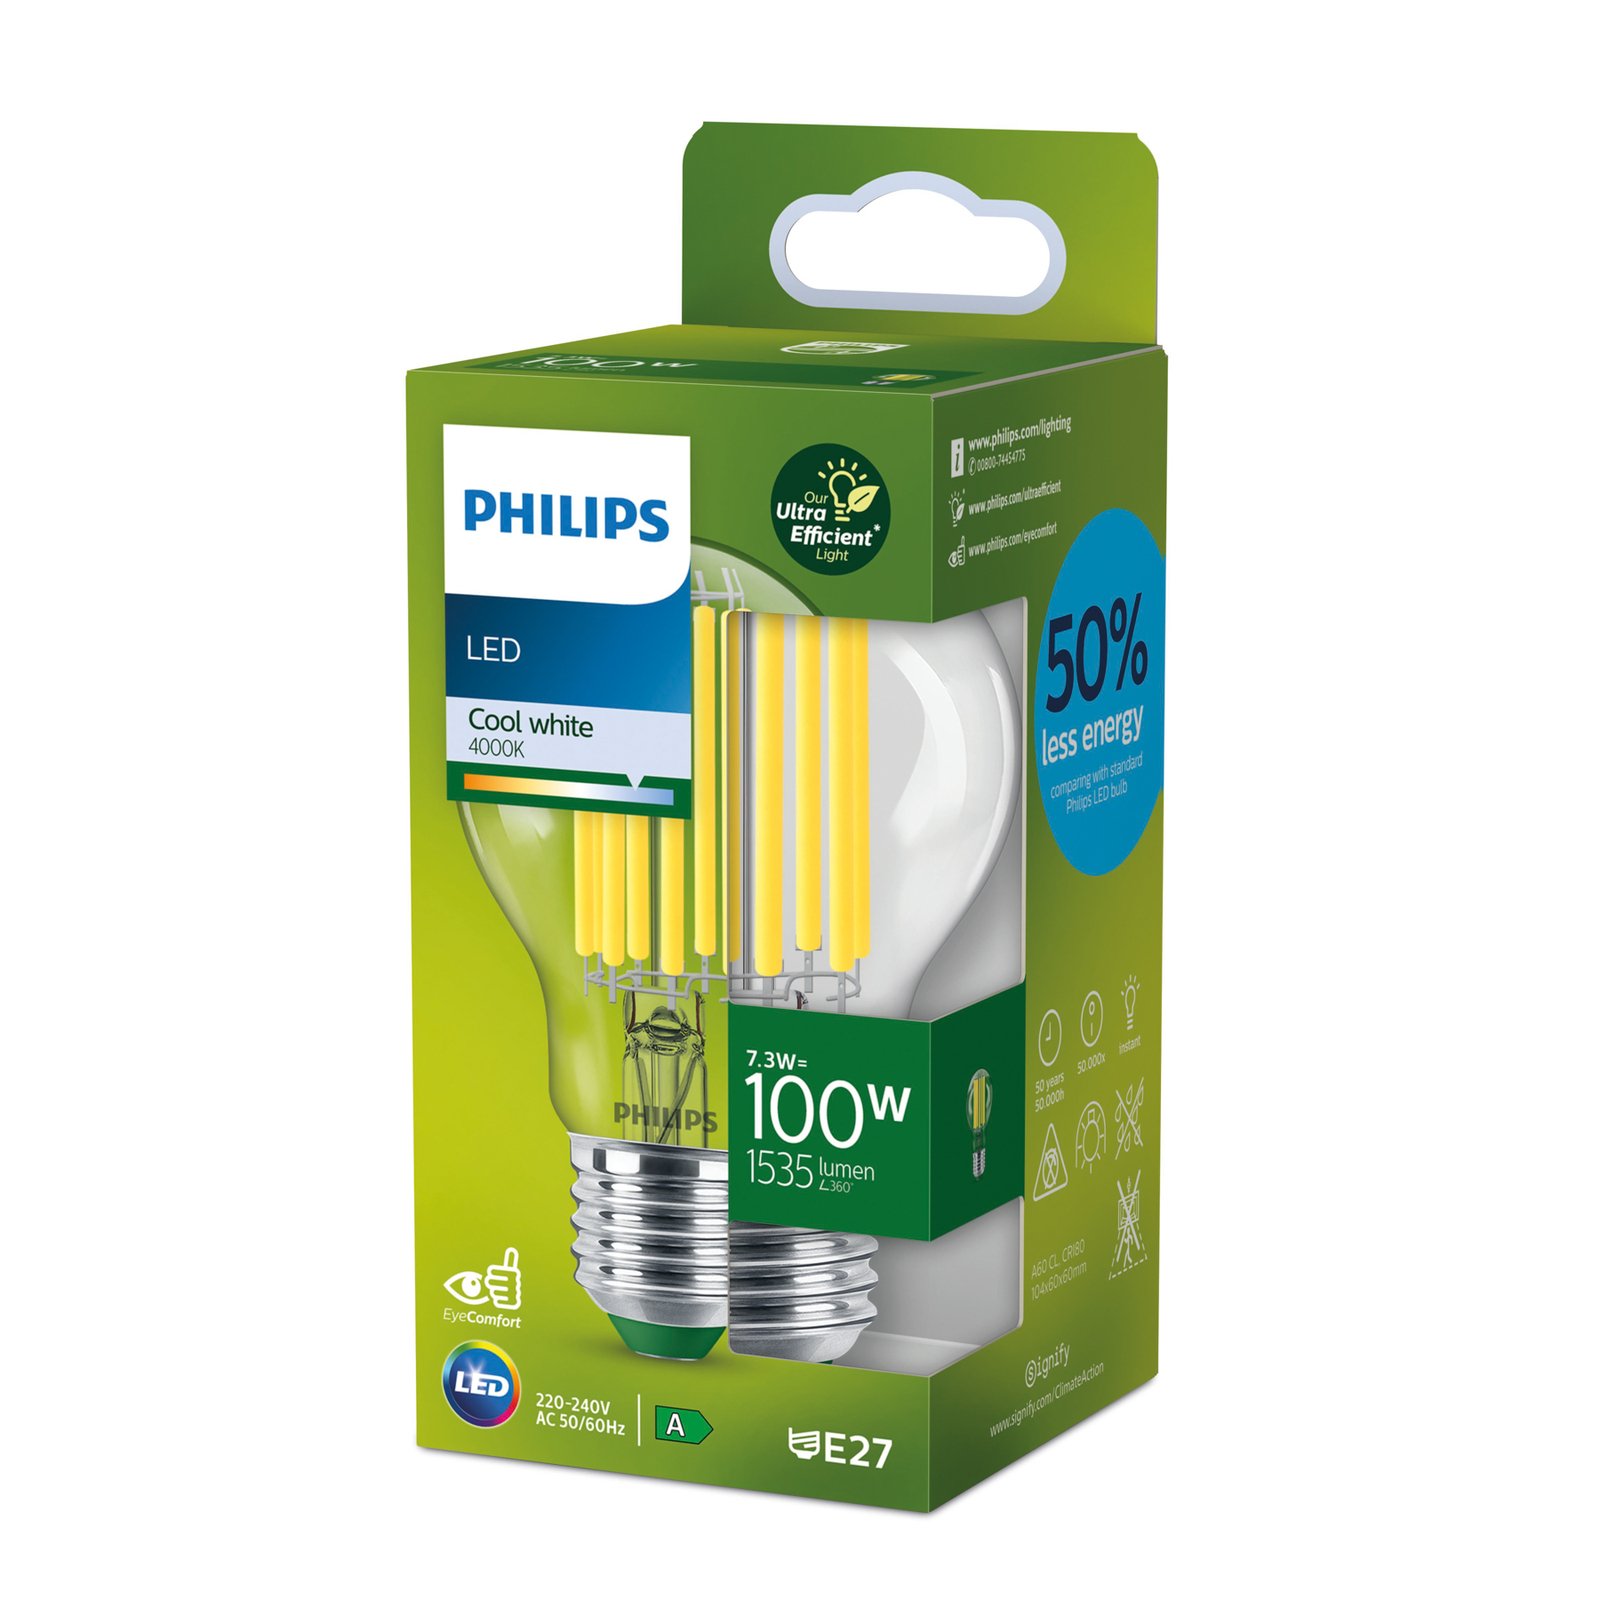 Philips E27 LED žárovka A60 7,3W 1535lm 4000K čirá